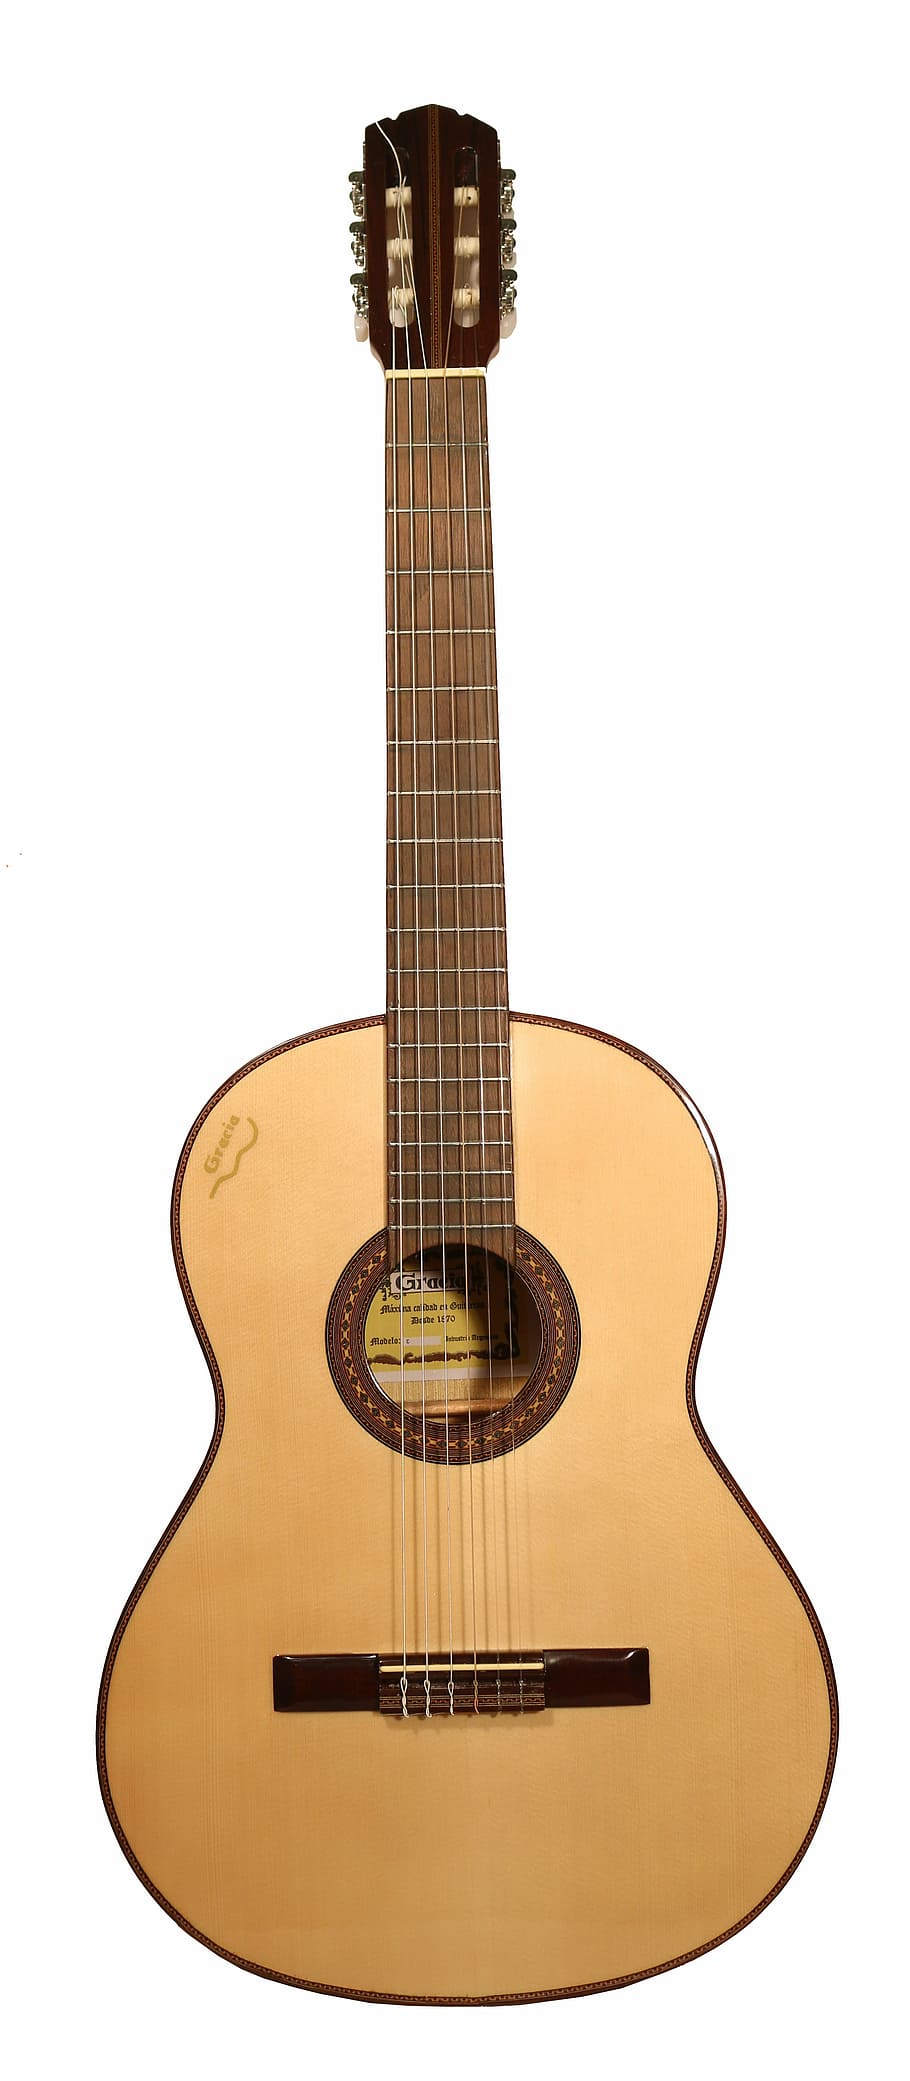 brown, classical, guitar, white, background, classic, luthier, spanish, diapason, box